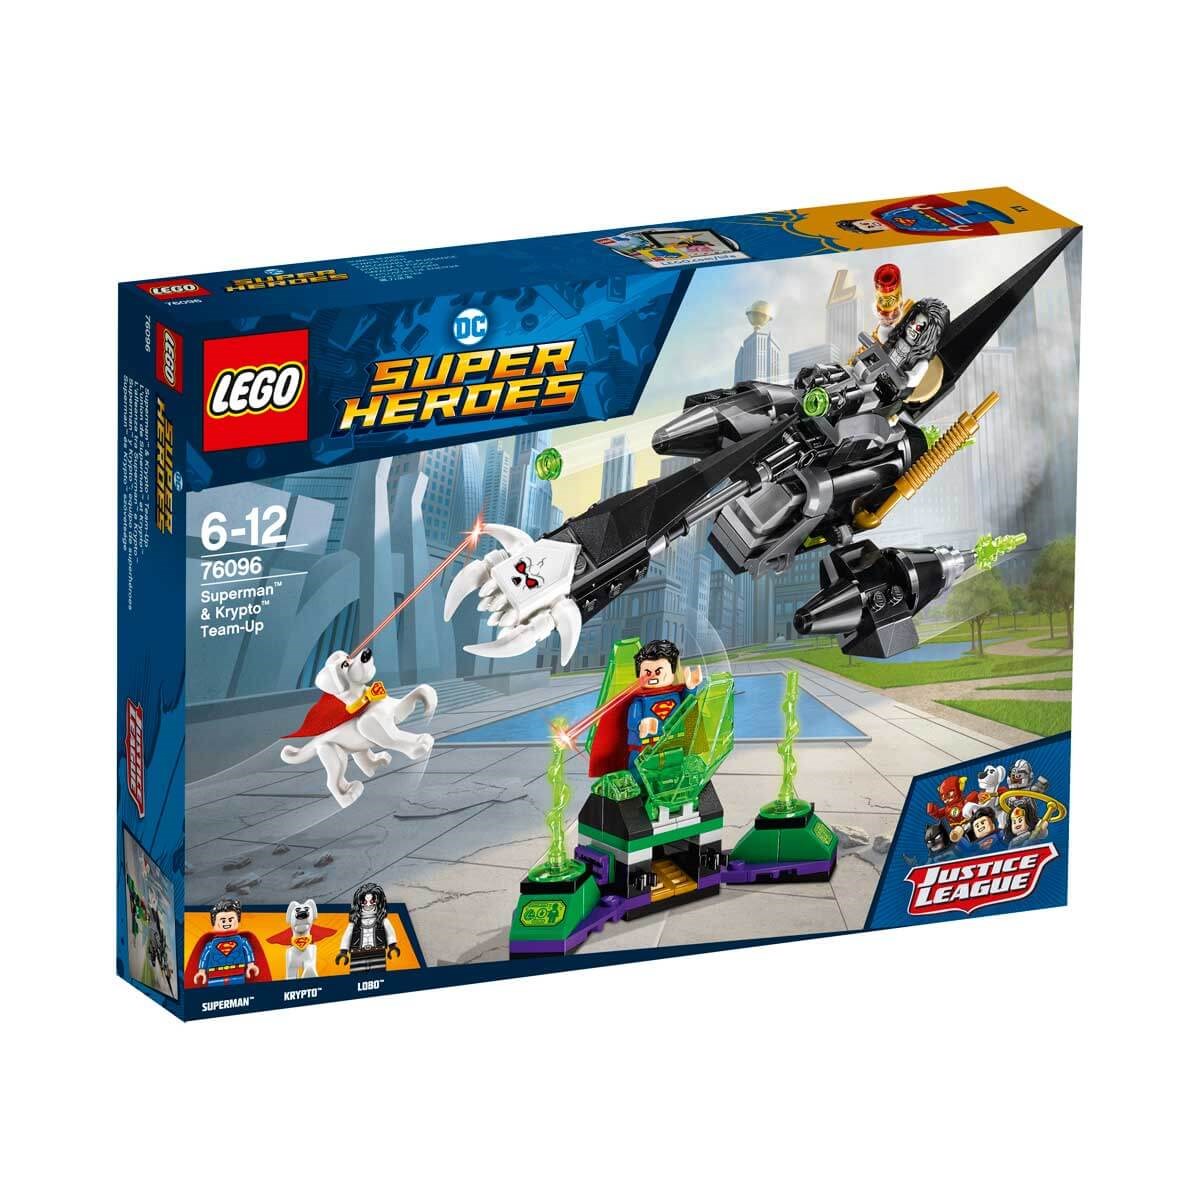 Lego DC Comics Super Heroes Superman ve Krypto Takımı 76096 